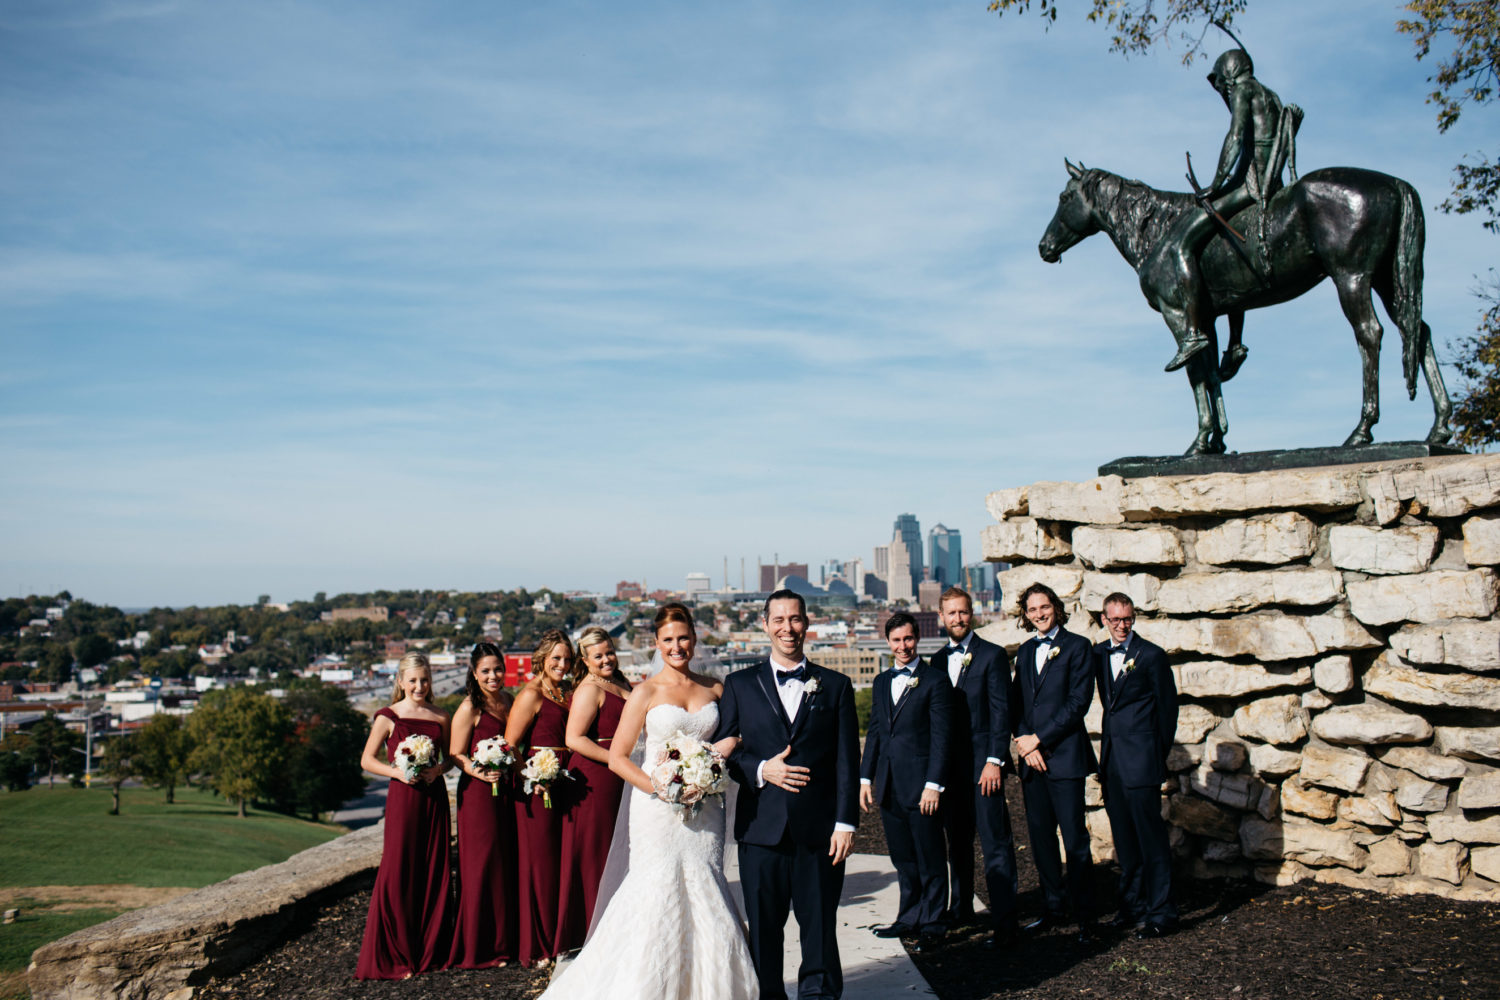 Kansas City Scout wedding picture